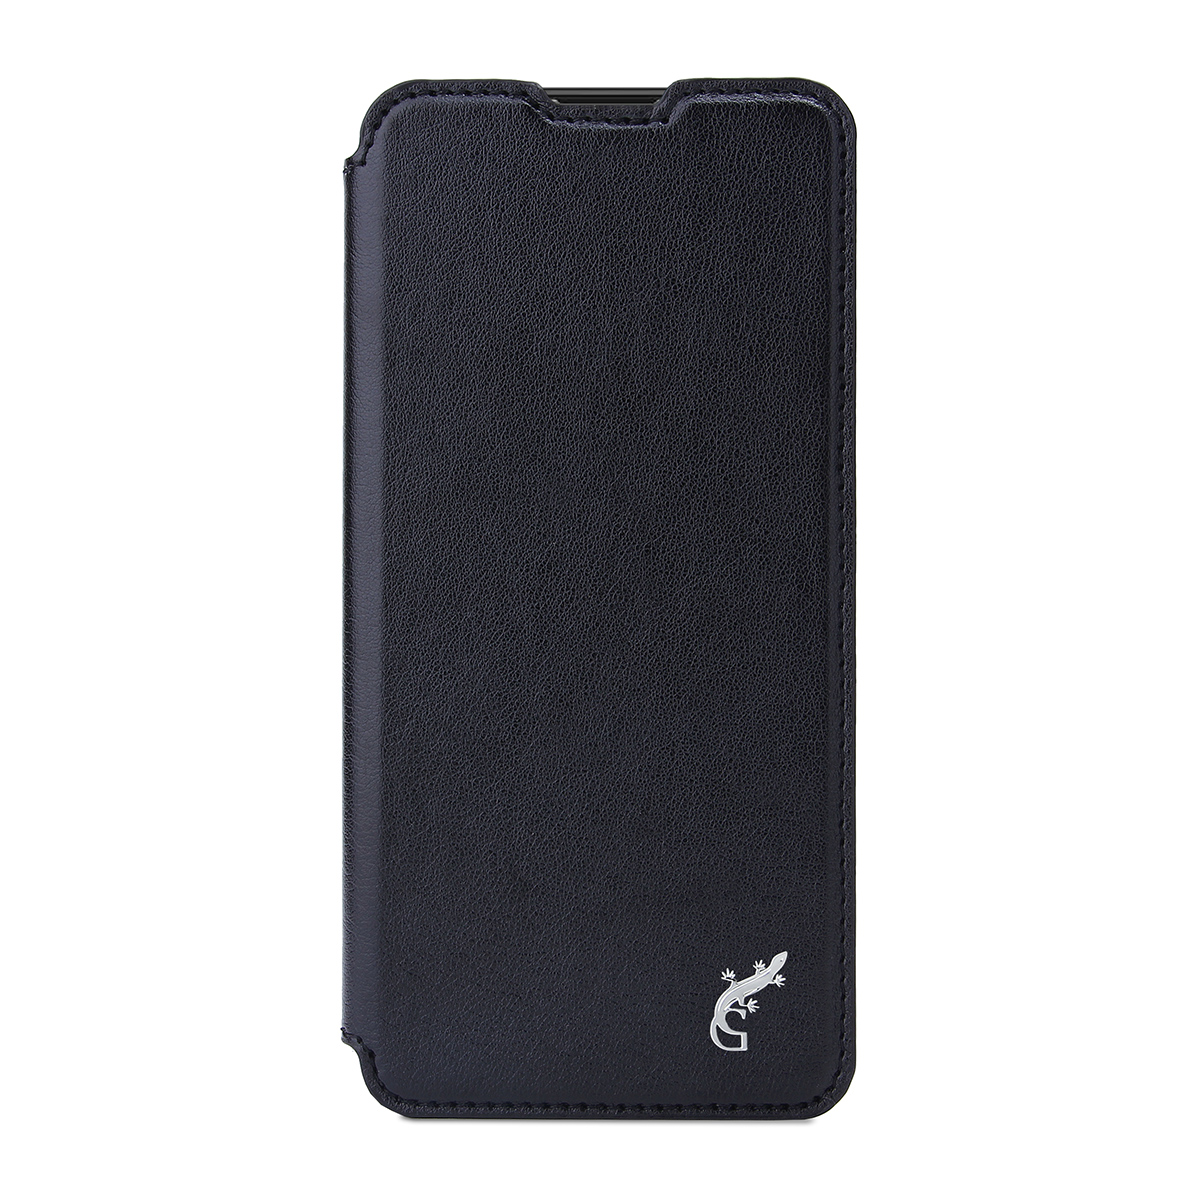 Чехол G-Case для ASUS ZenFone 6 ZS630KL Slim Premium Black GG-1122